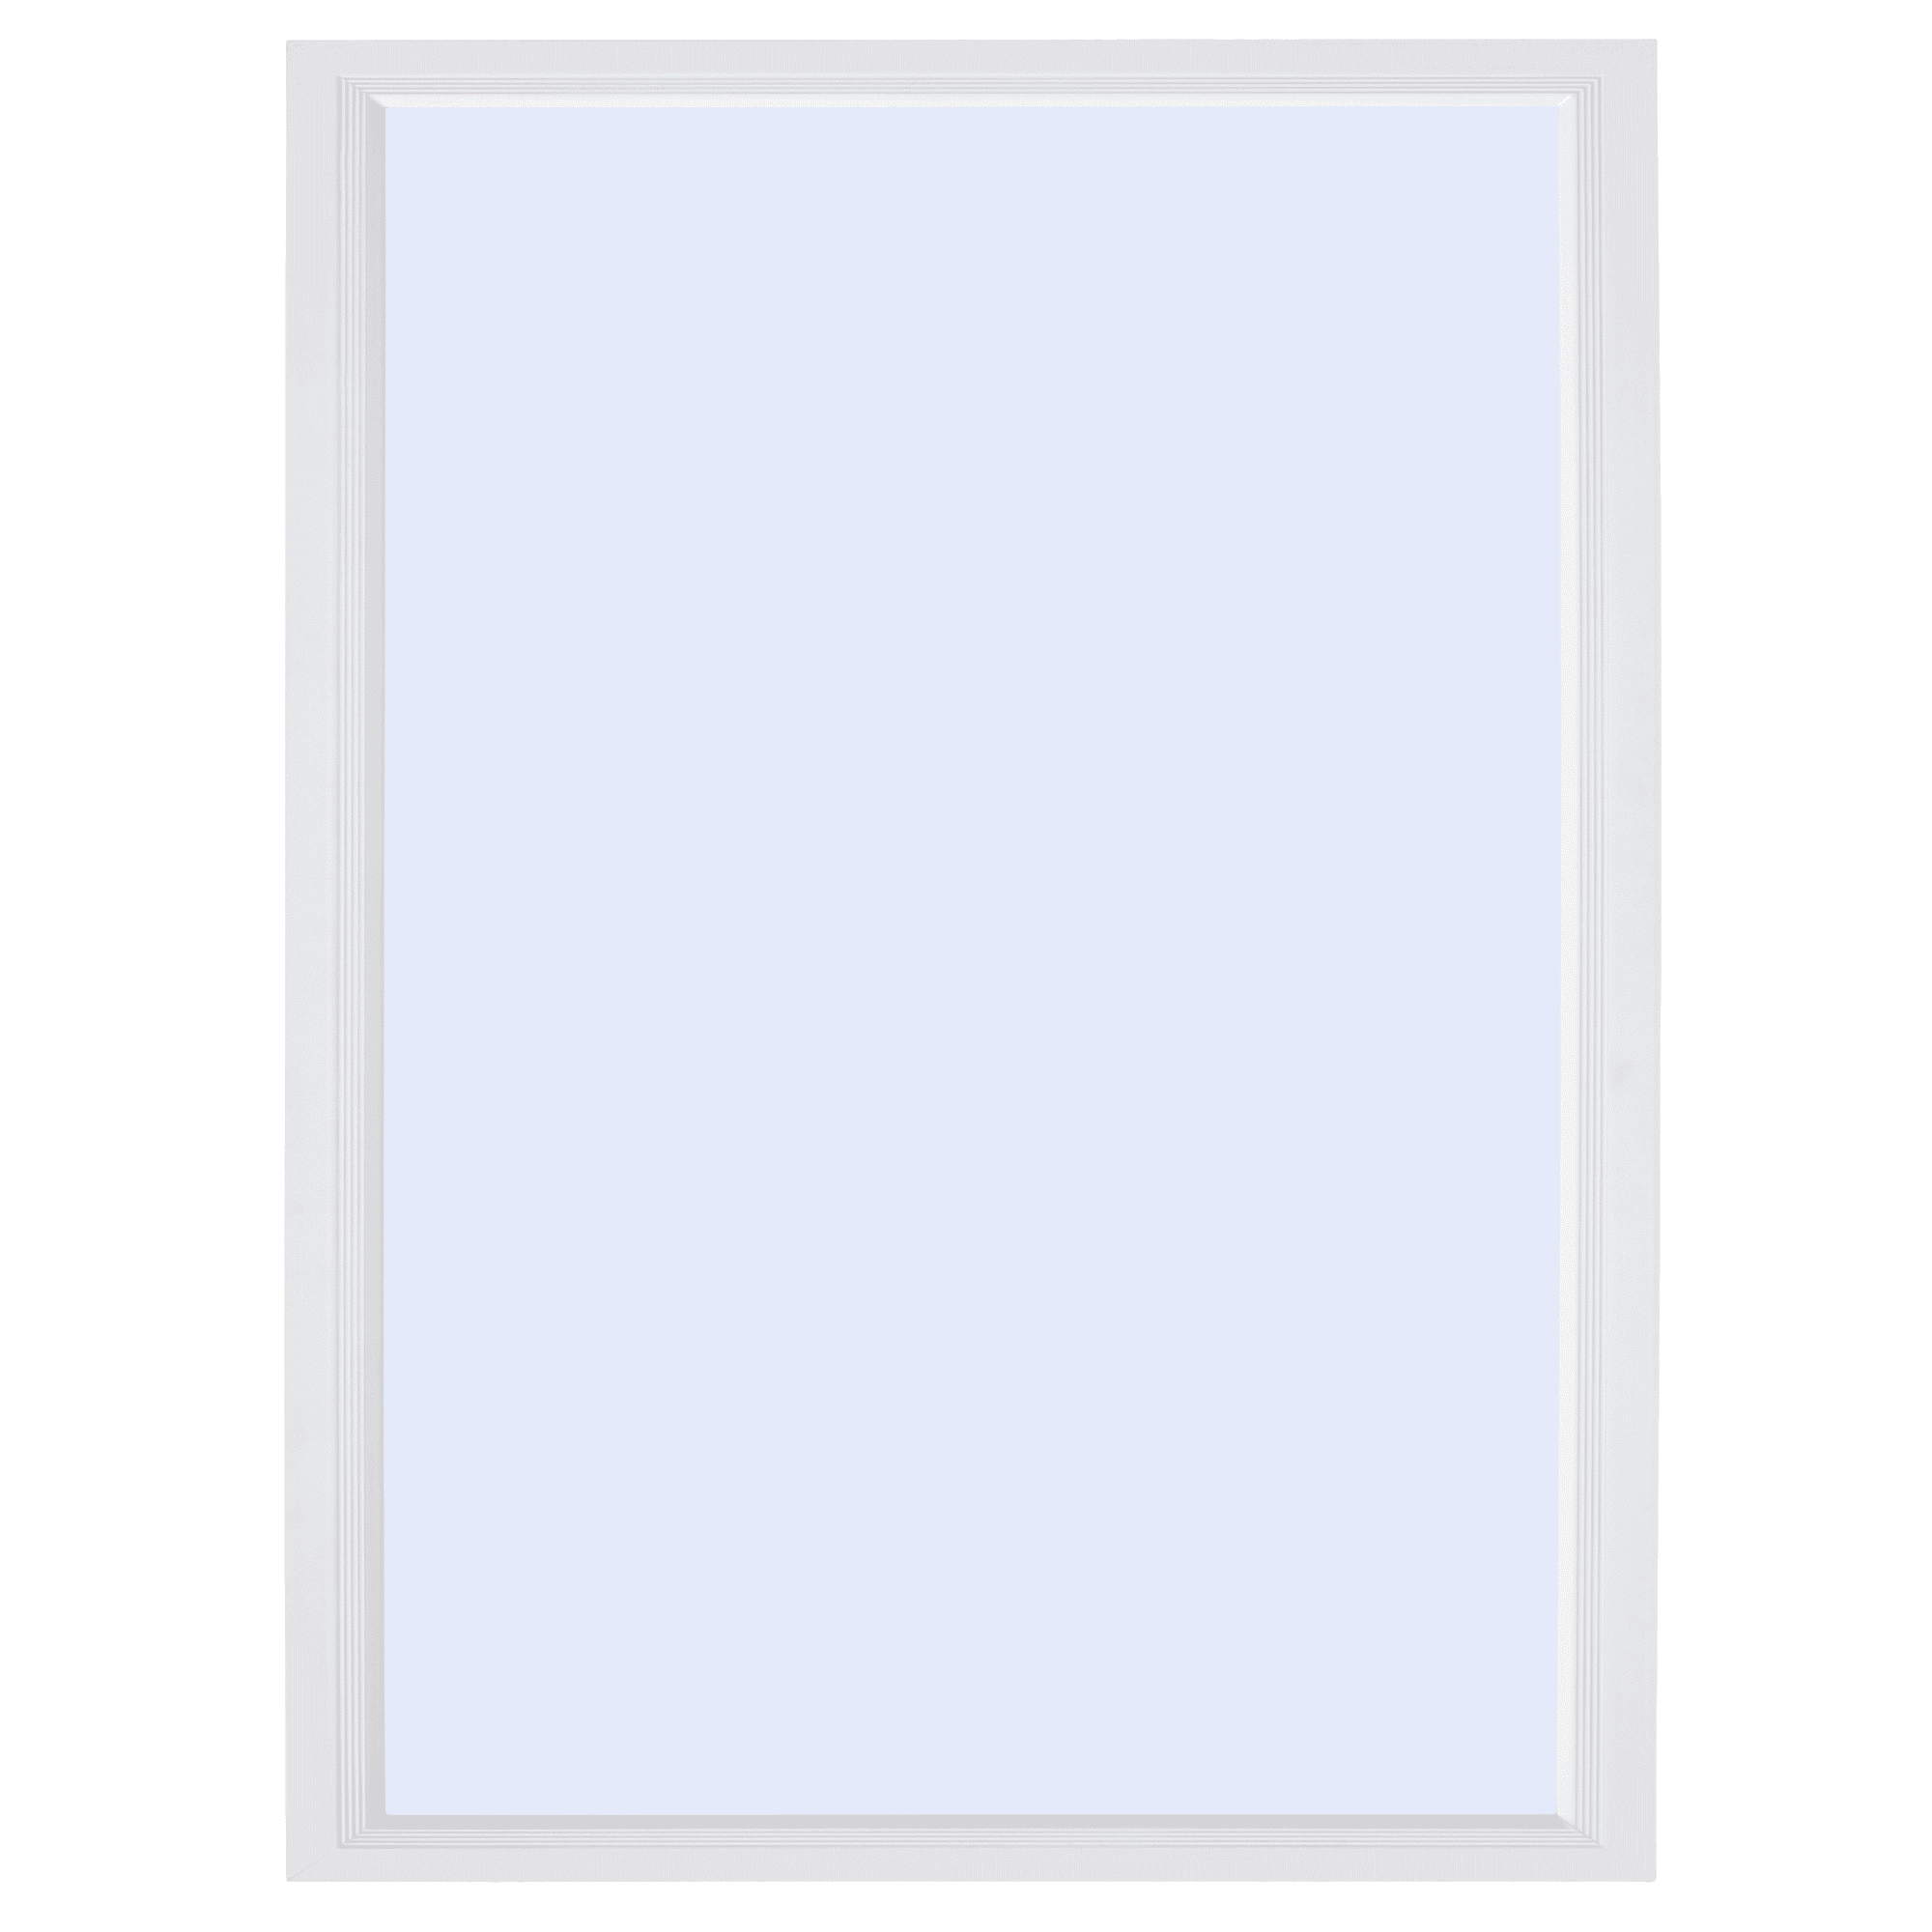 TELEFUNKEN CCT LED Panel, 59,5 cm, 36 W, Weiß